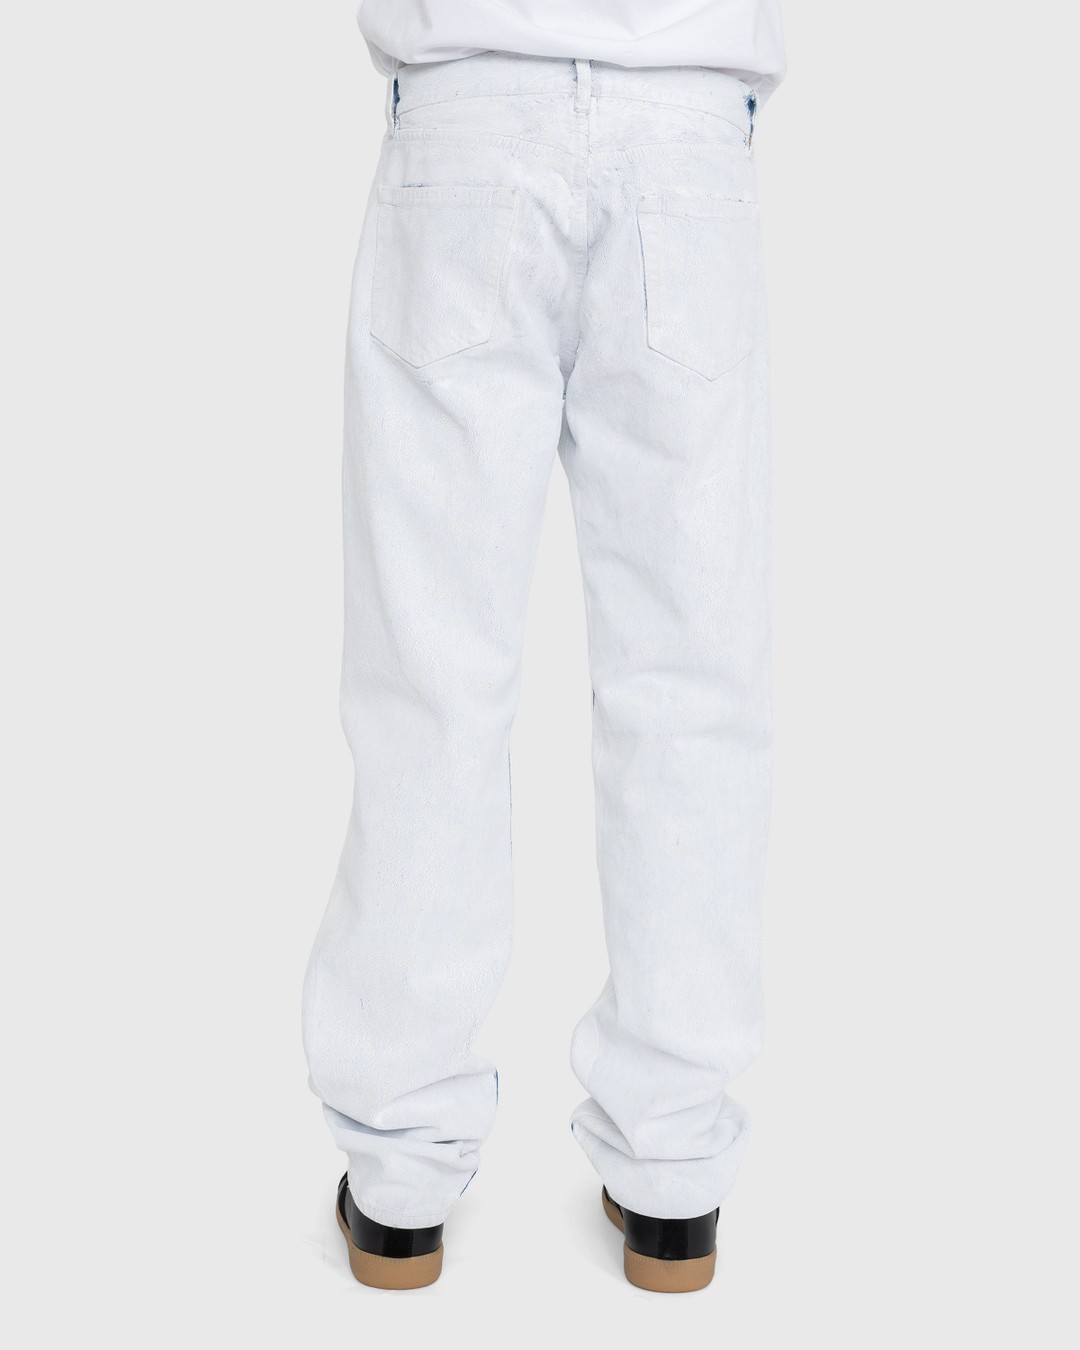 Maison Margiela – 5-Pocket Paint Jeans White - Denim - White - Image 4